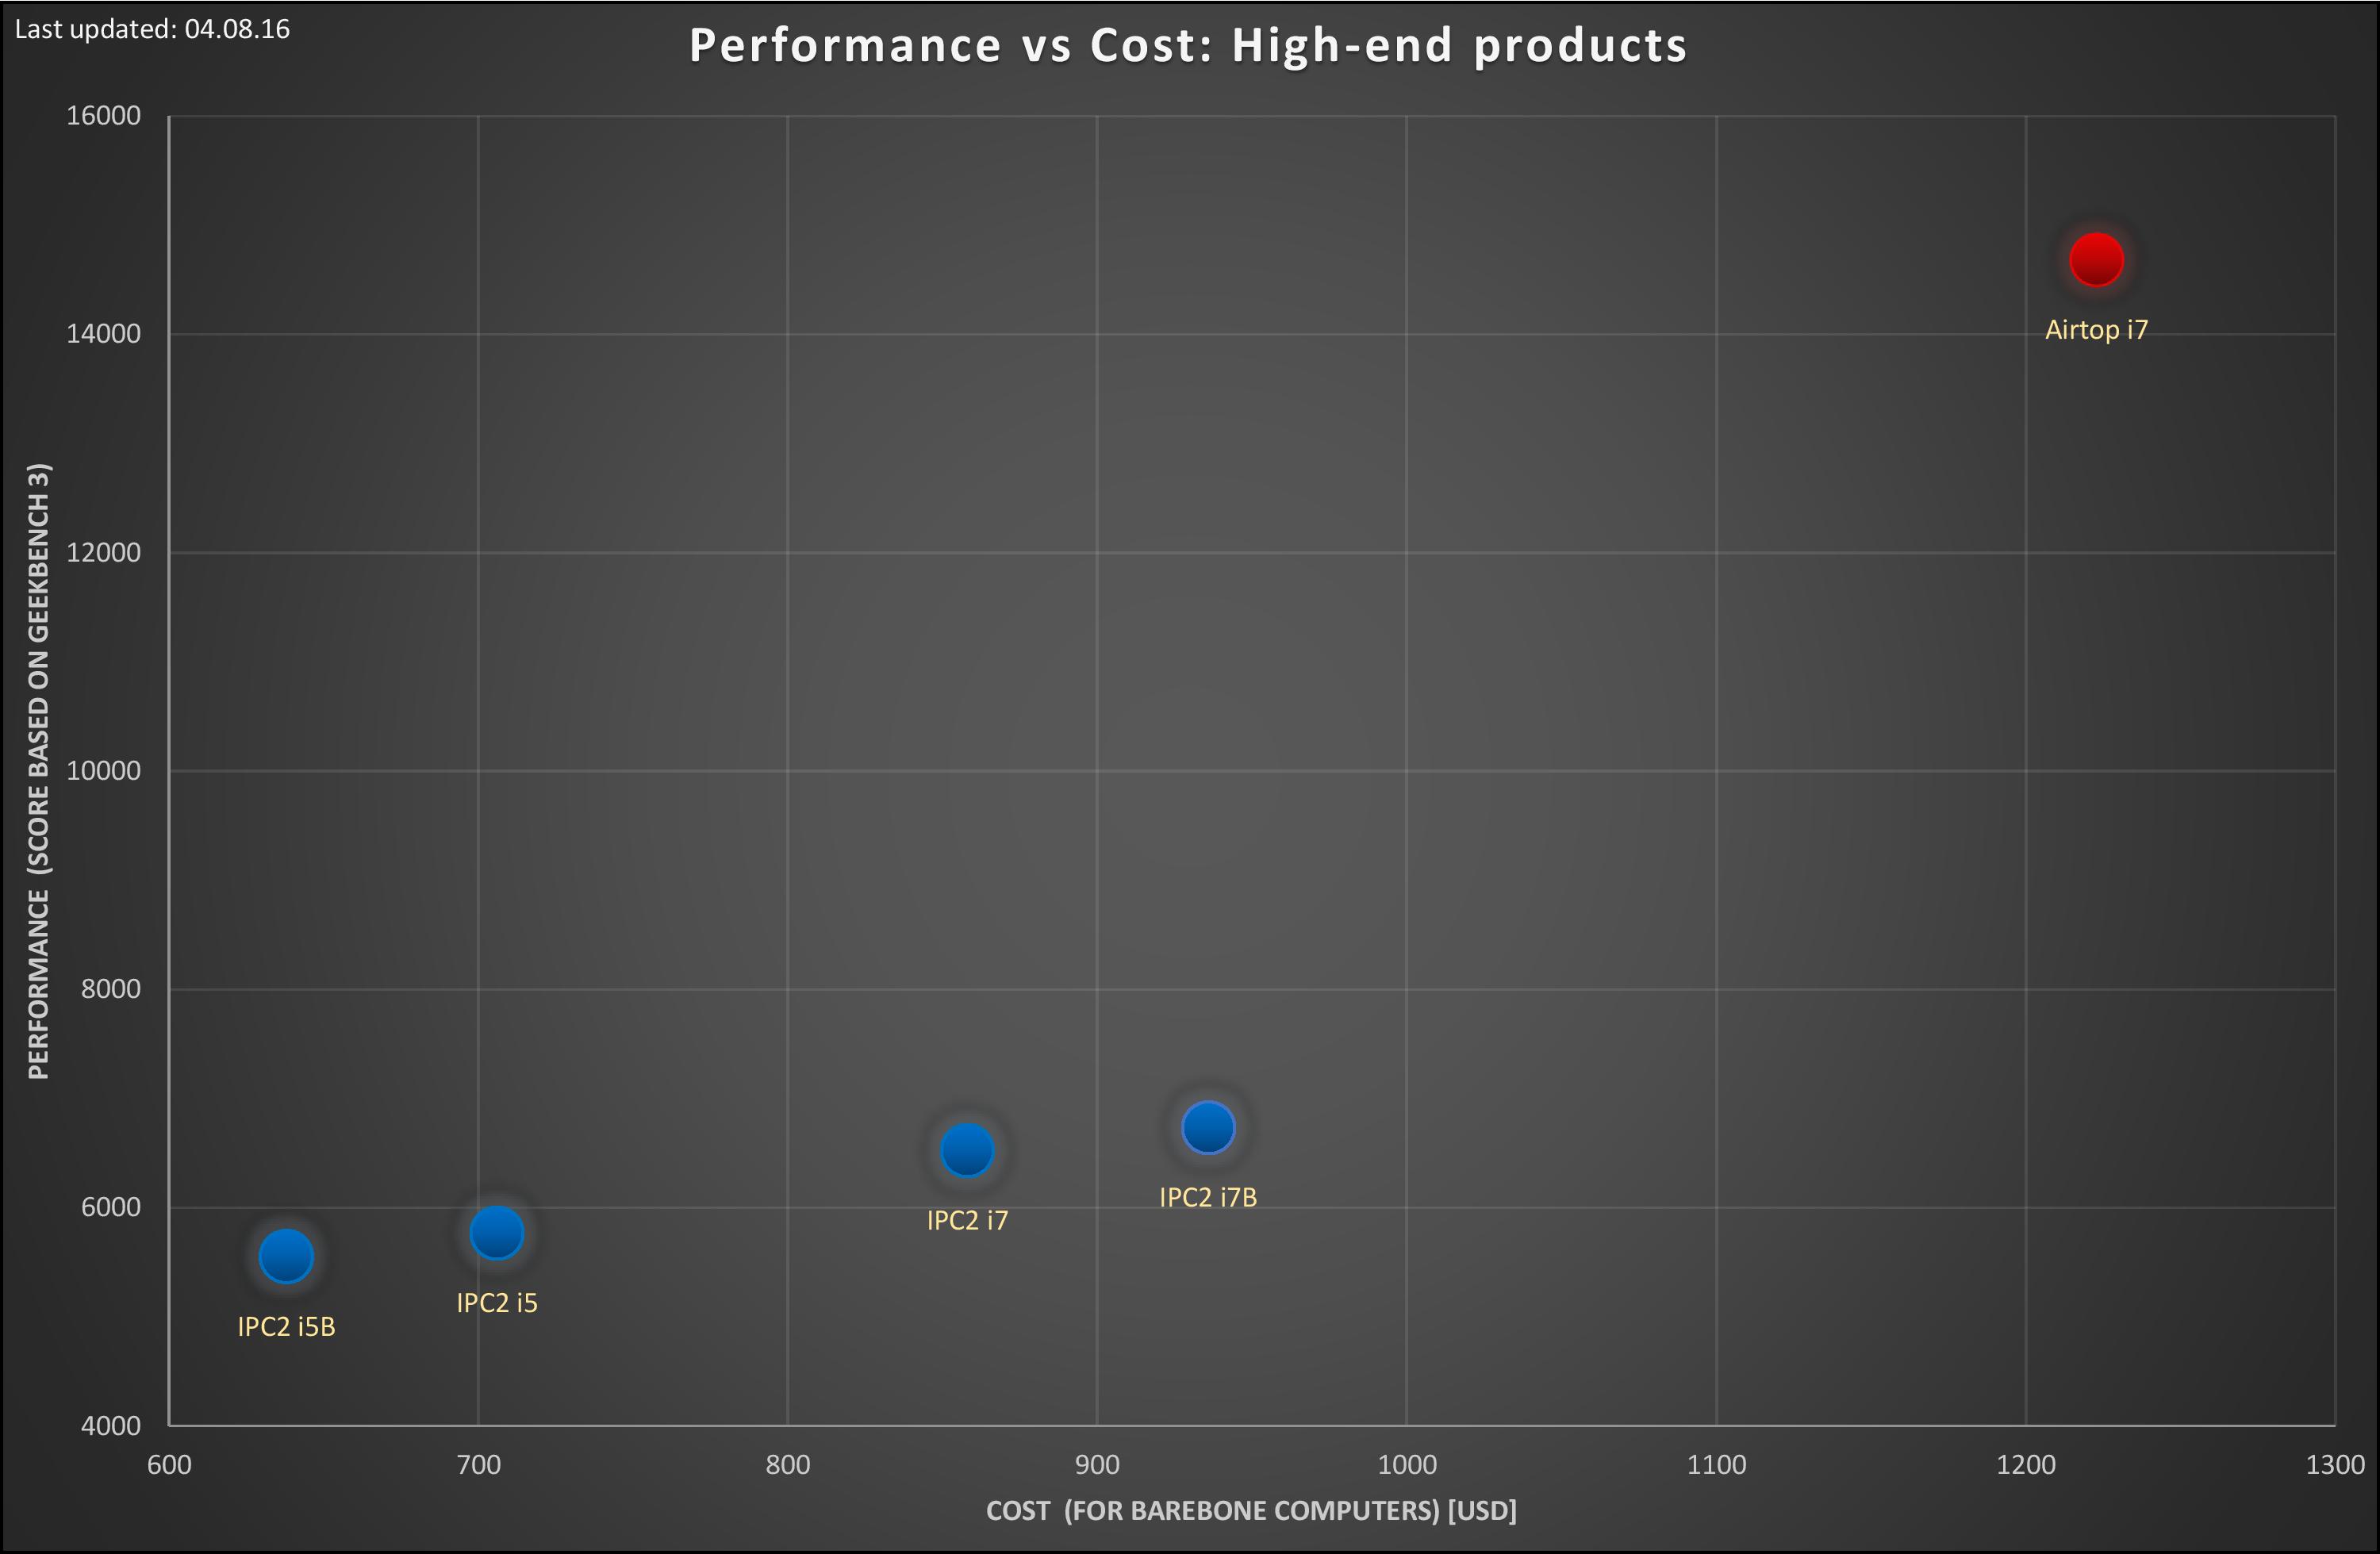 Performance-vs-cost-analysis-high-end 04.08.16.jpg